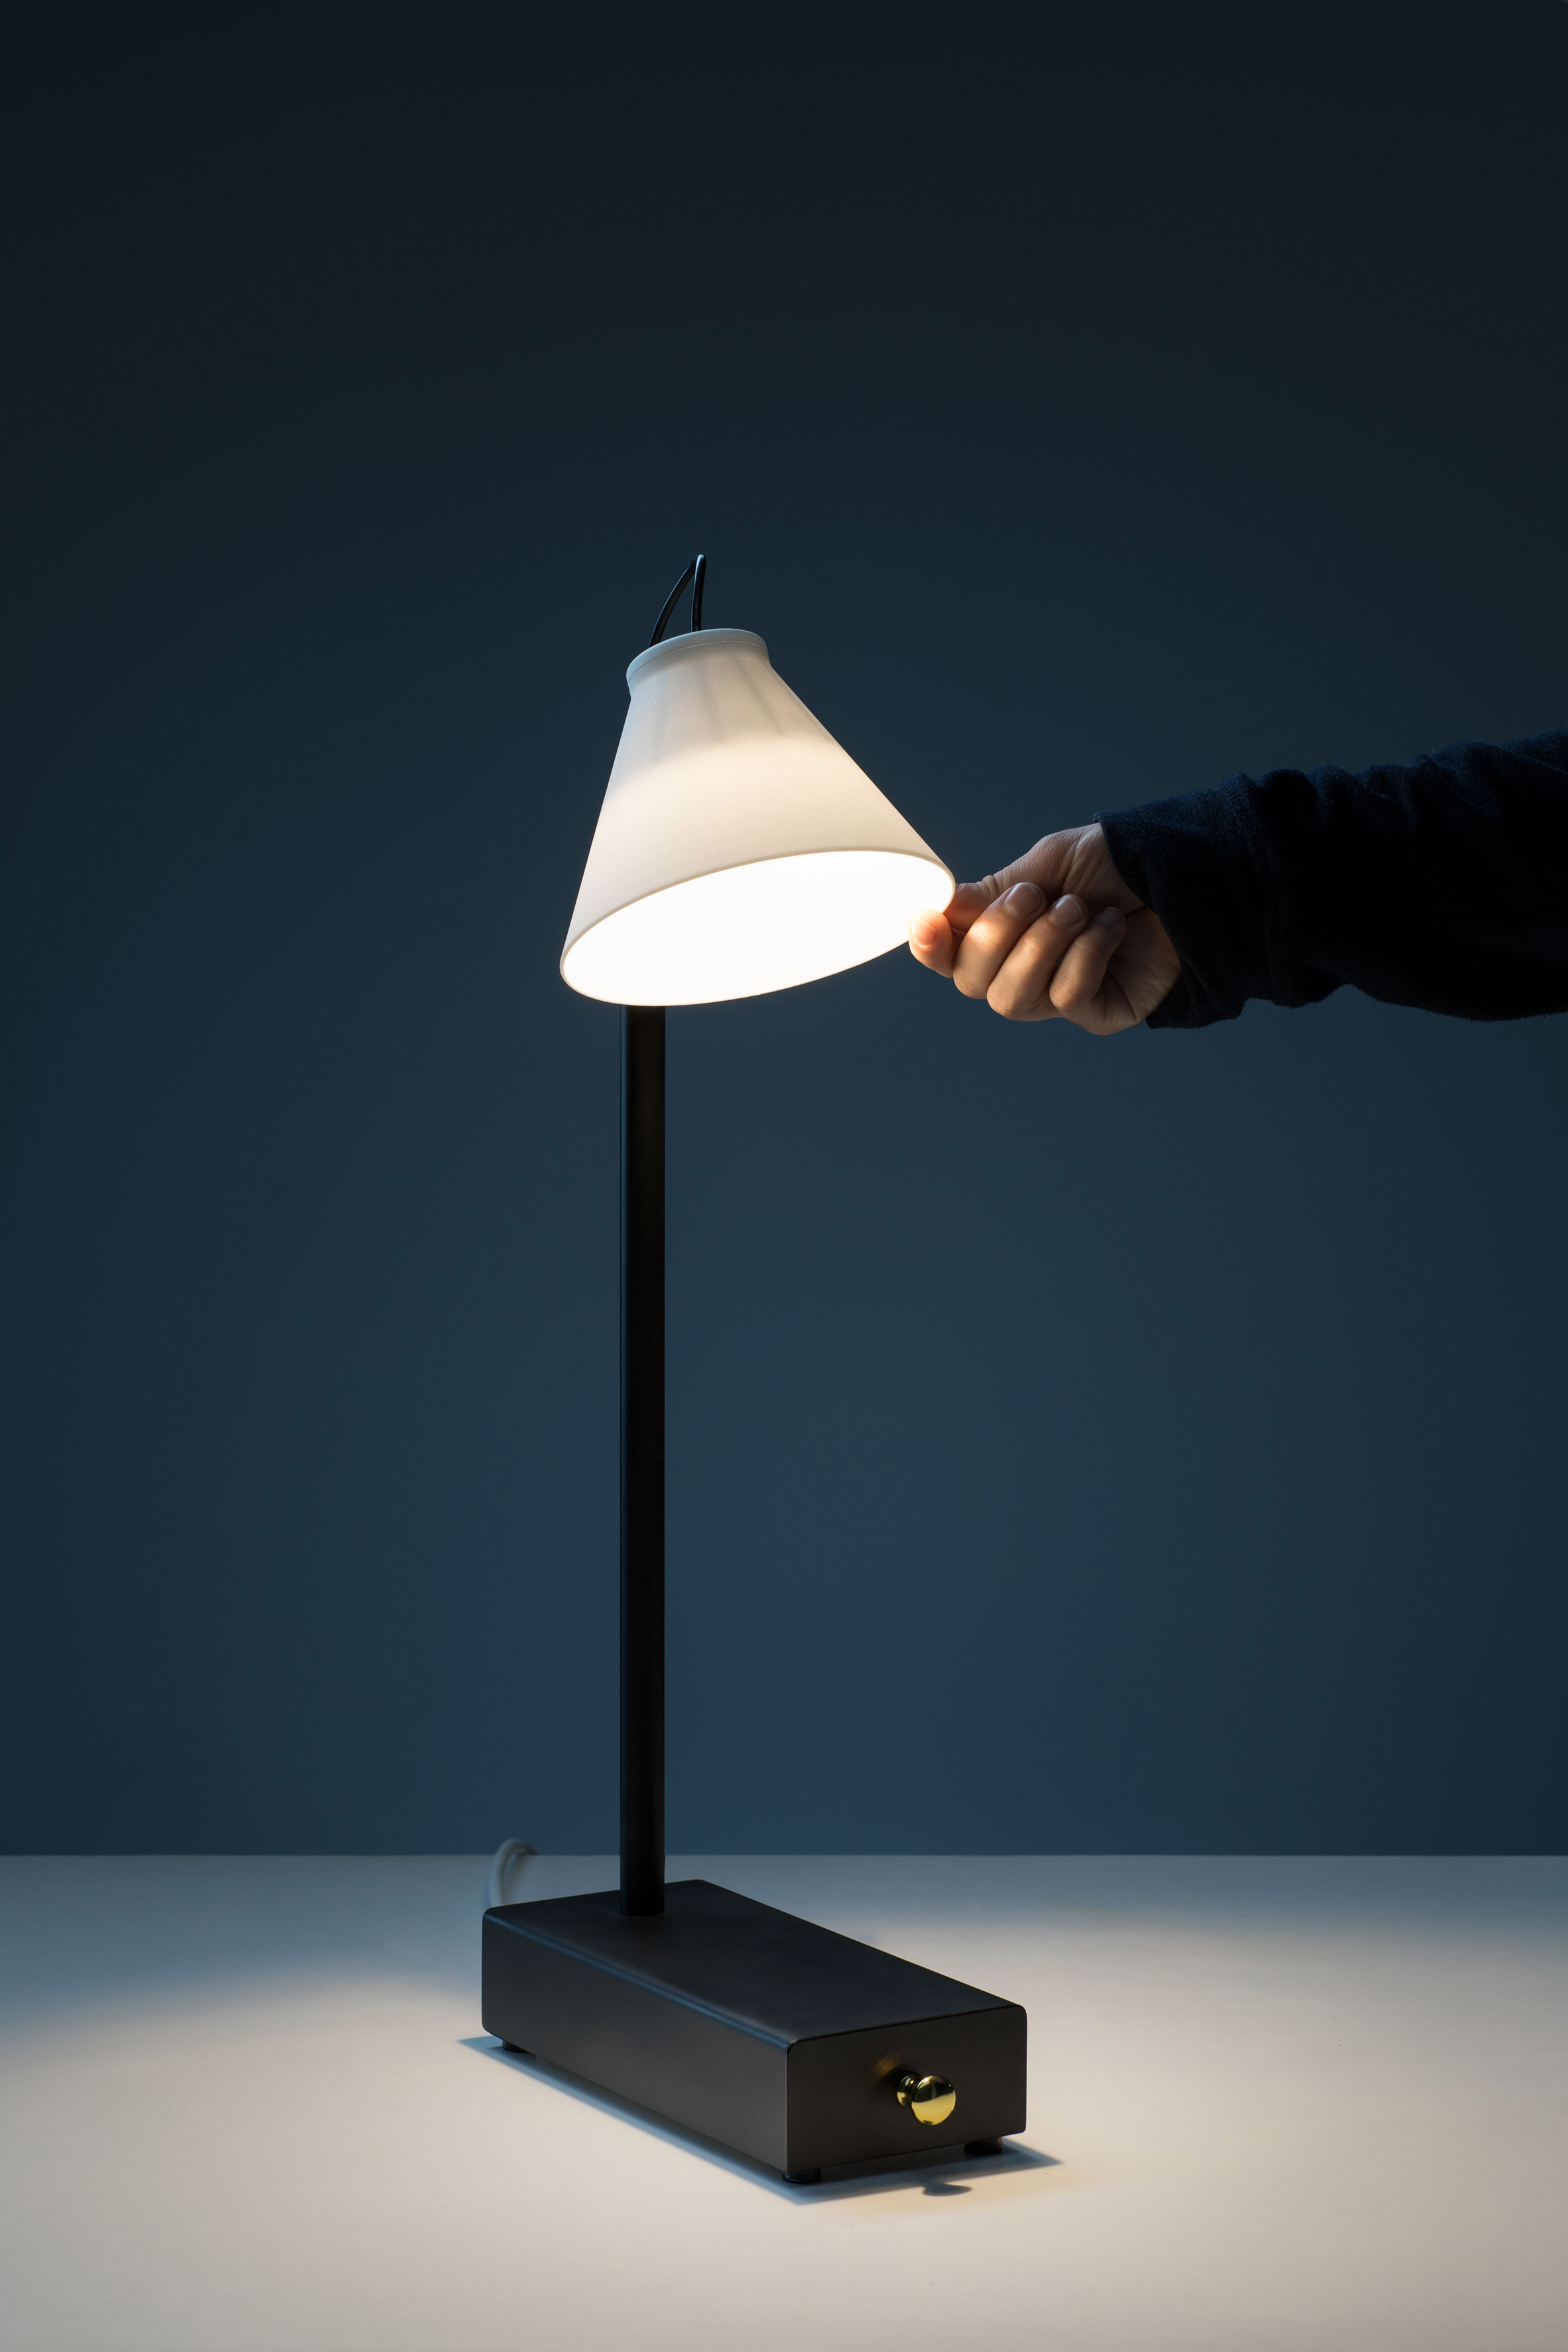 Klemens Schillinger's lamps supply electricity in exchange for users' smartphones